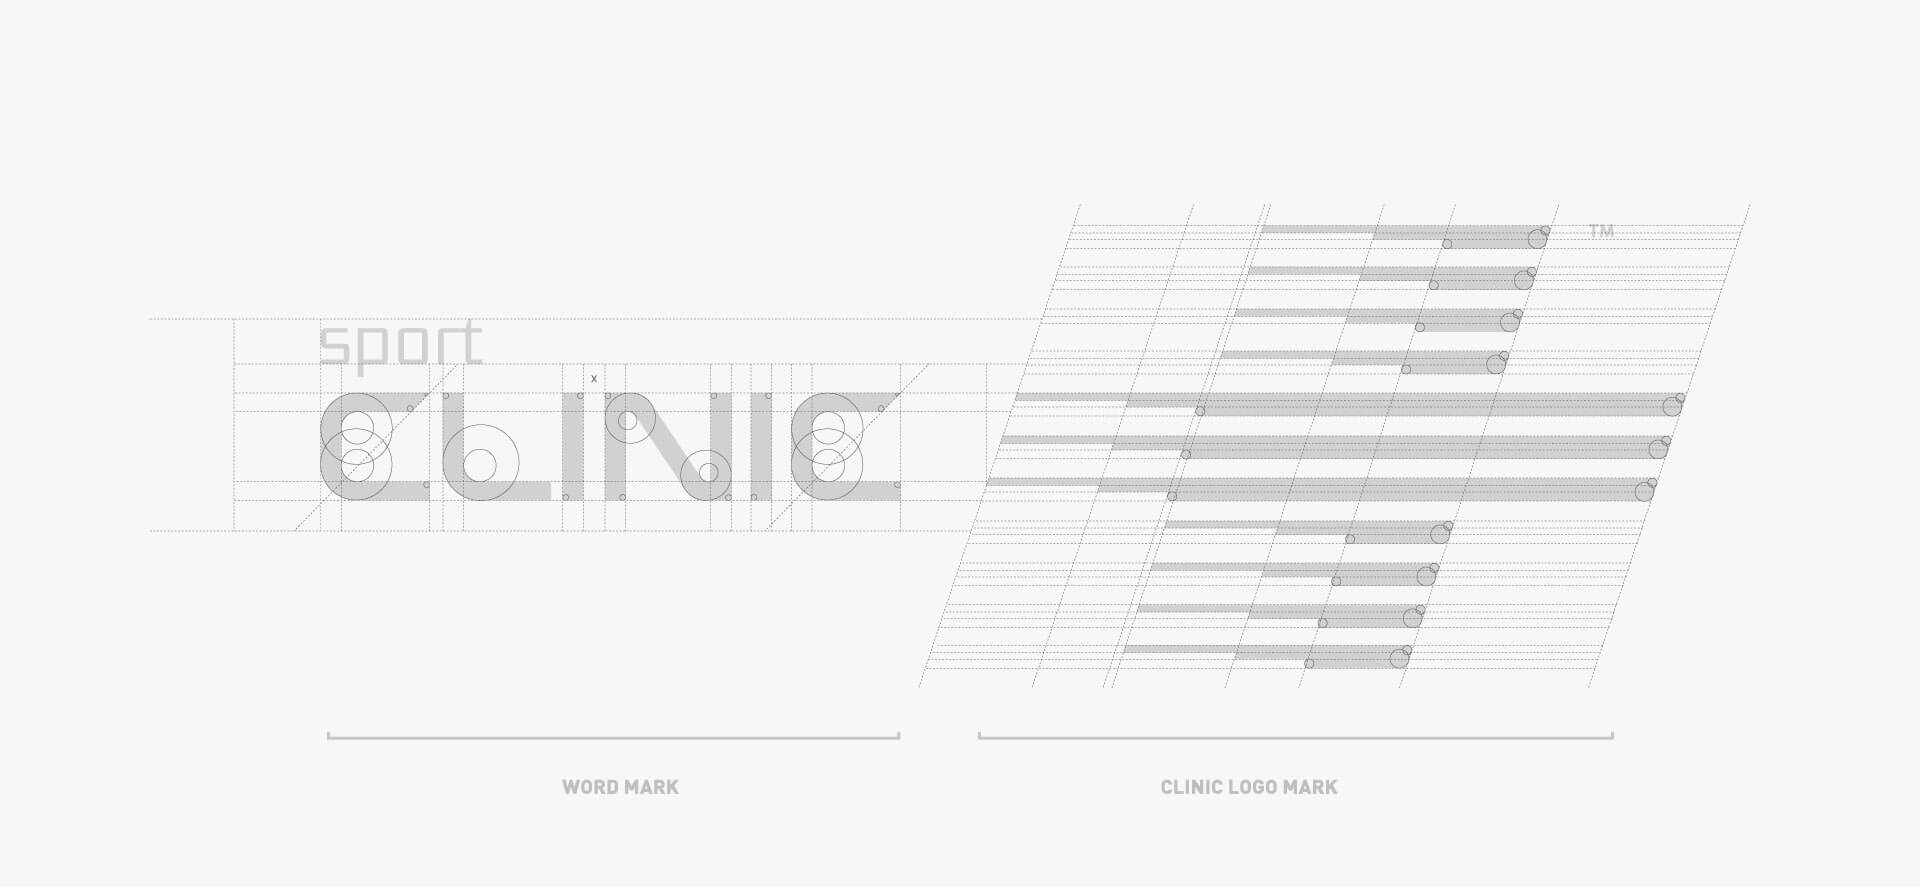 Clinic_layout_09e_name